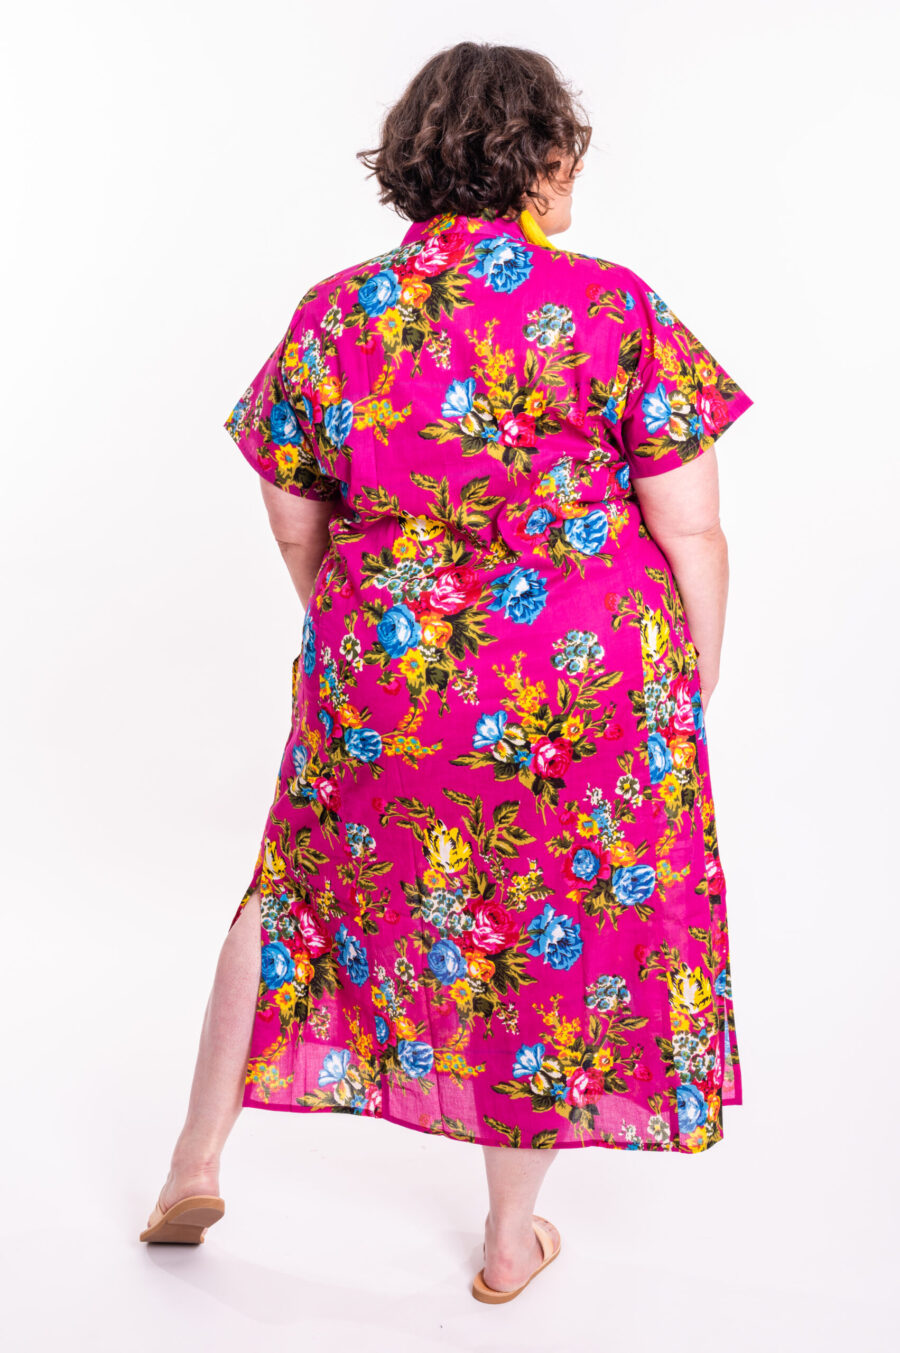 Jalabiya dress | Uniquely designed dress – Pink dress with colorful rose print